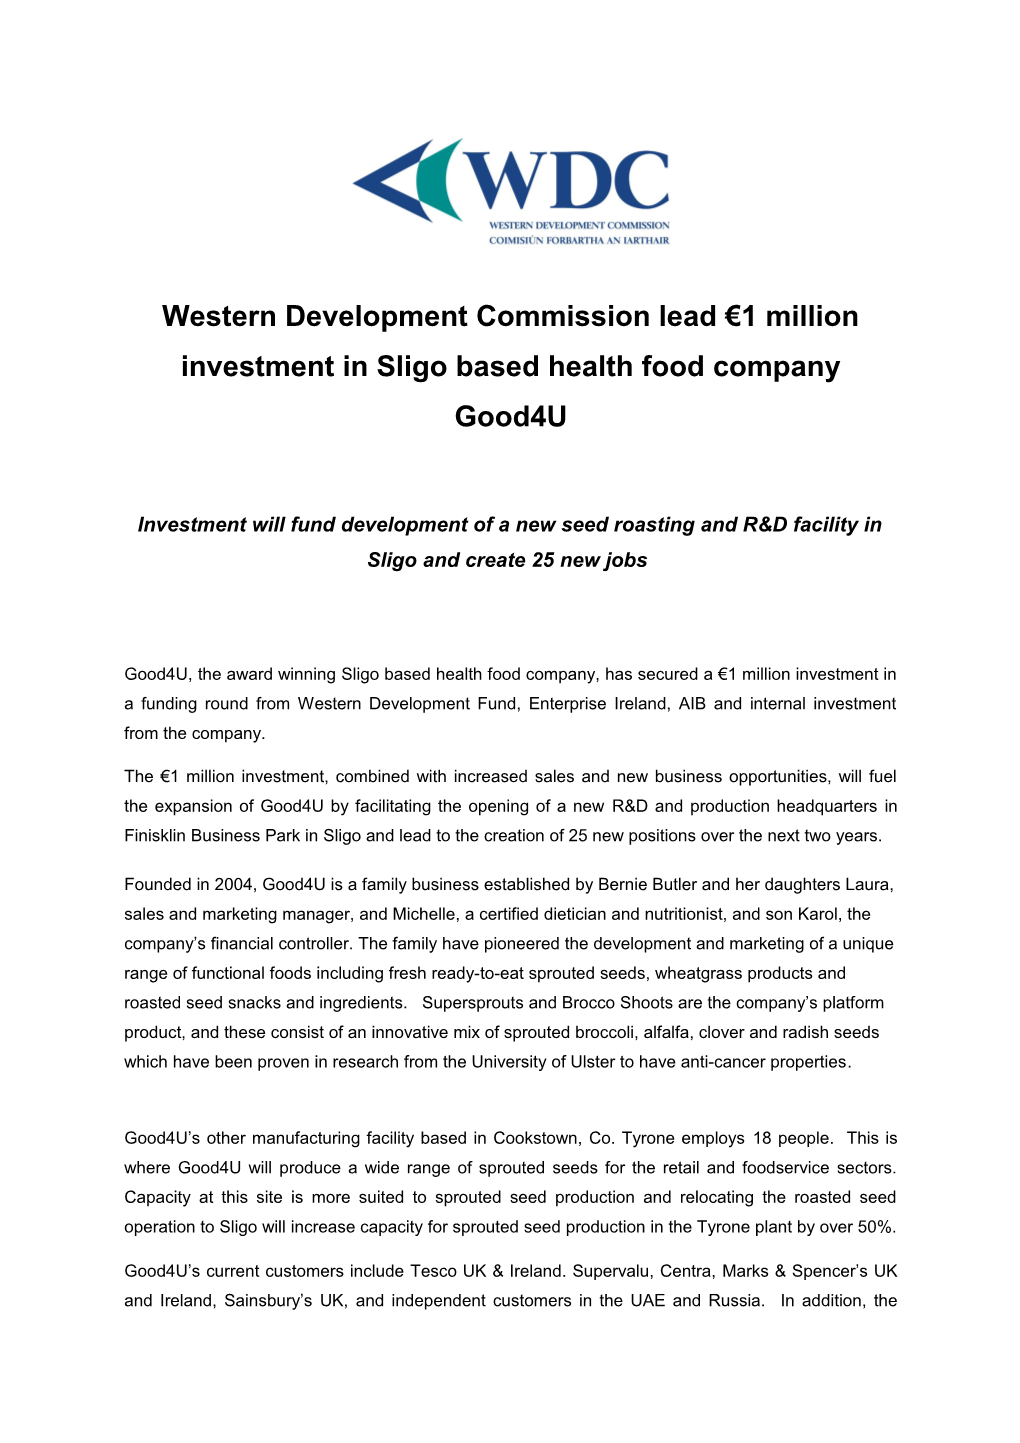 Western Development Commission Lead 1 Million Investment in Sligo Based Health Food Company